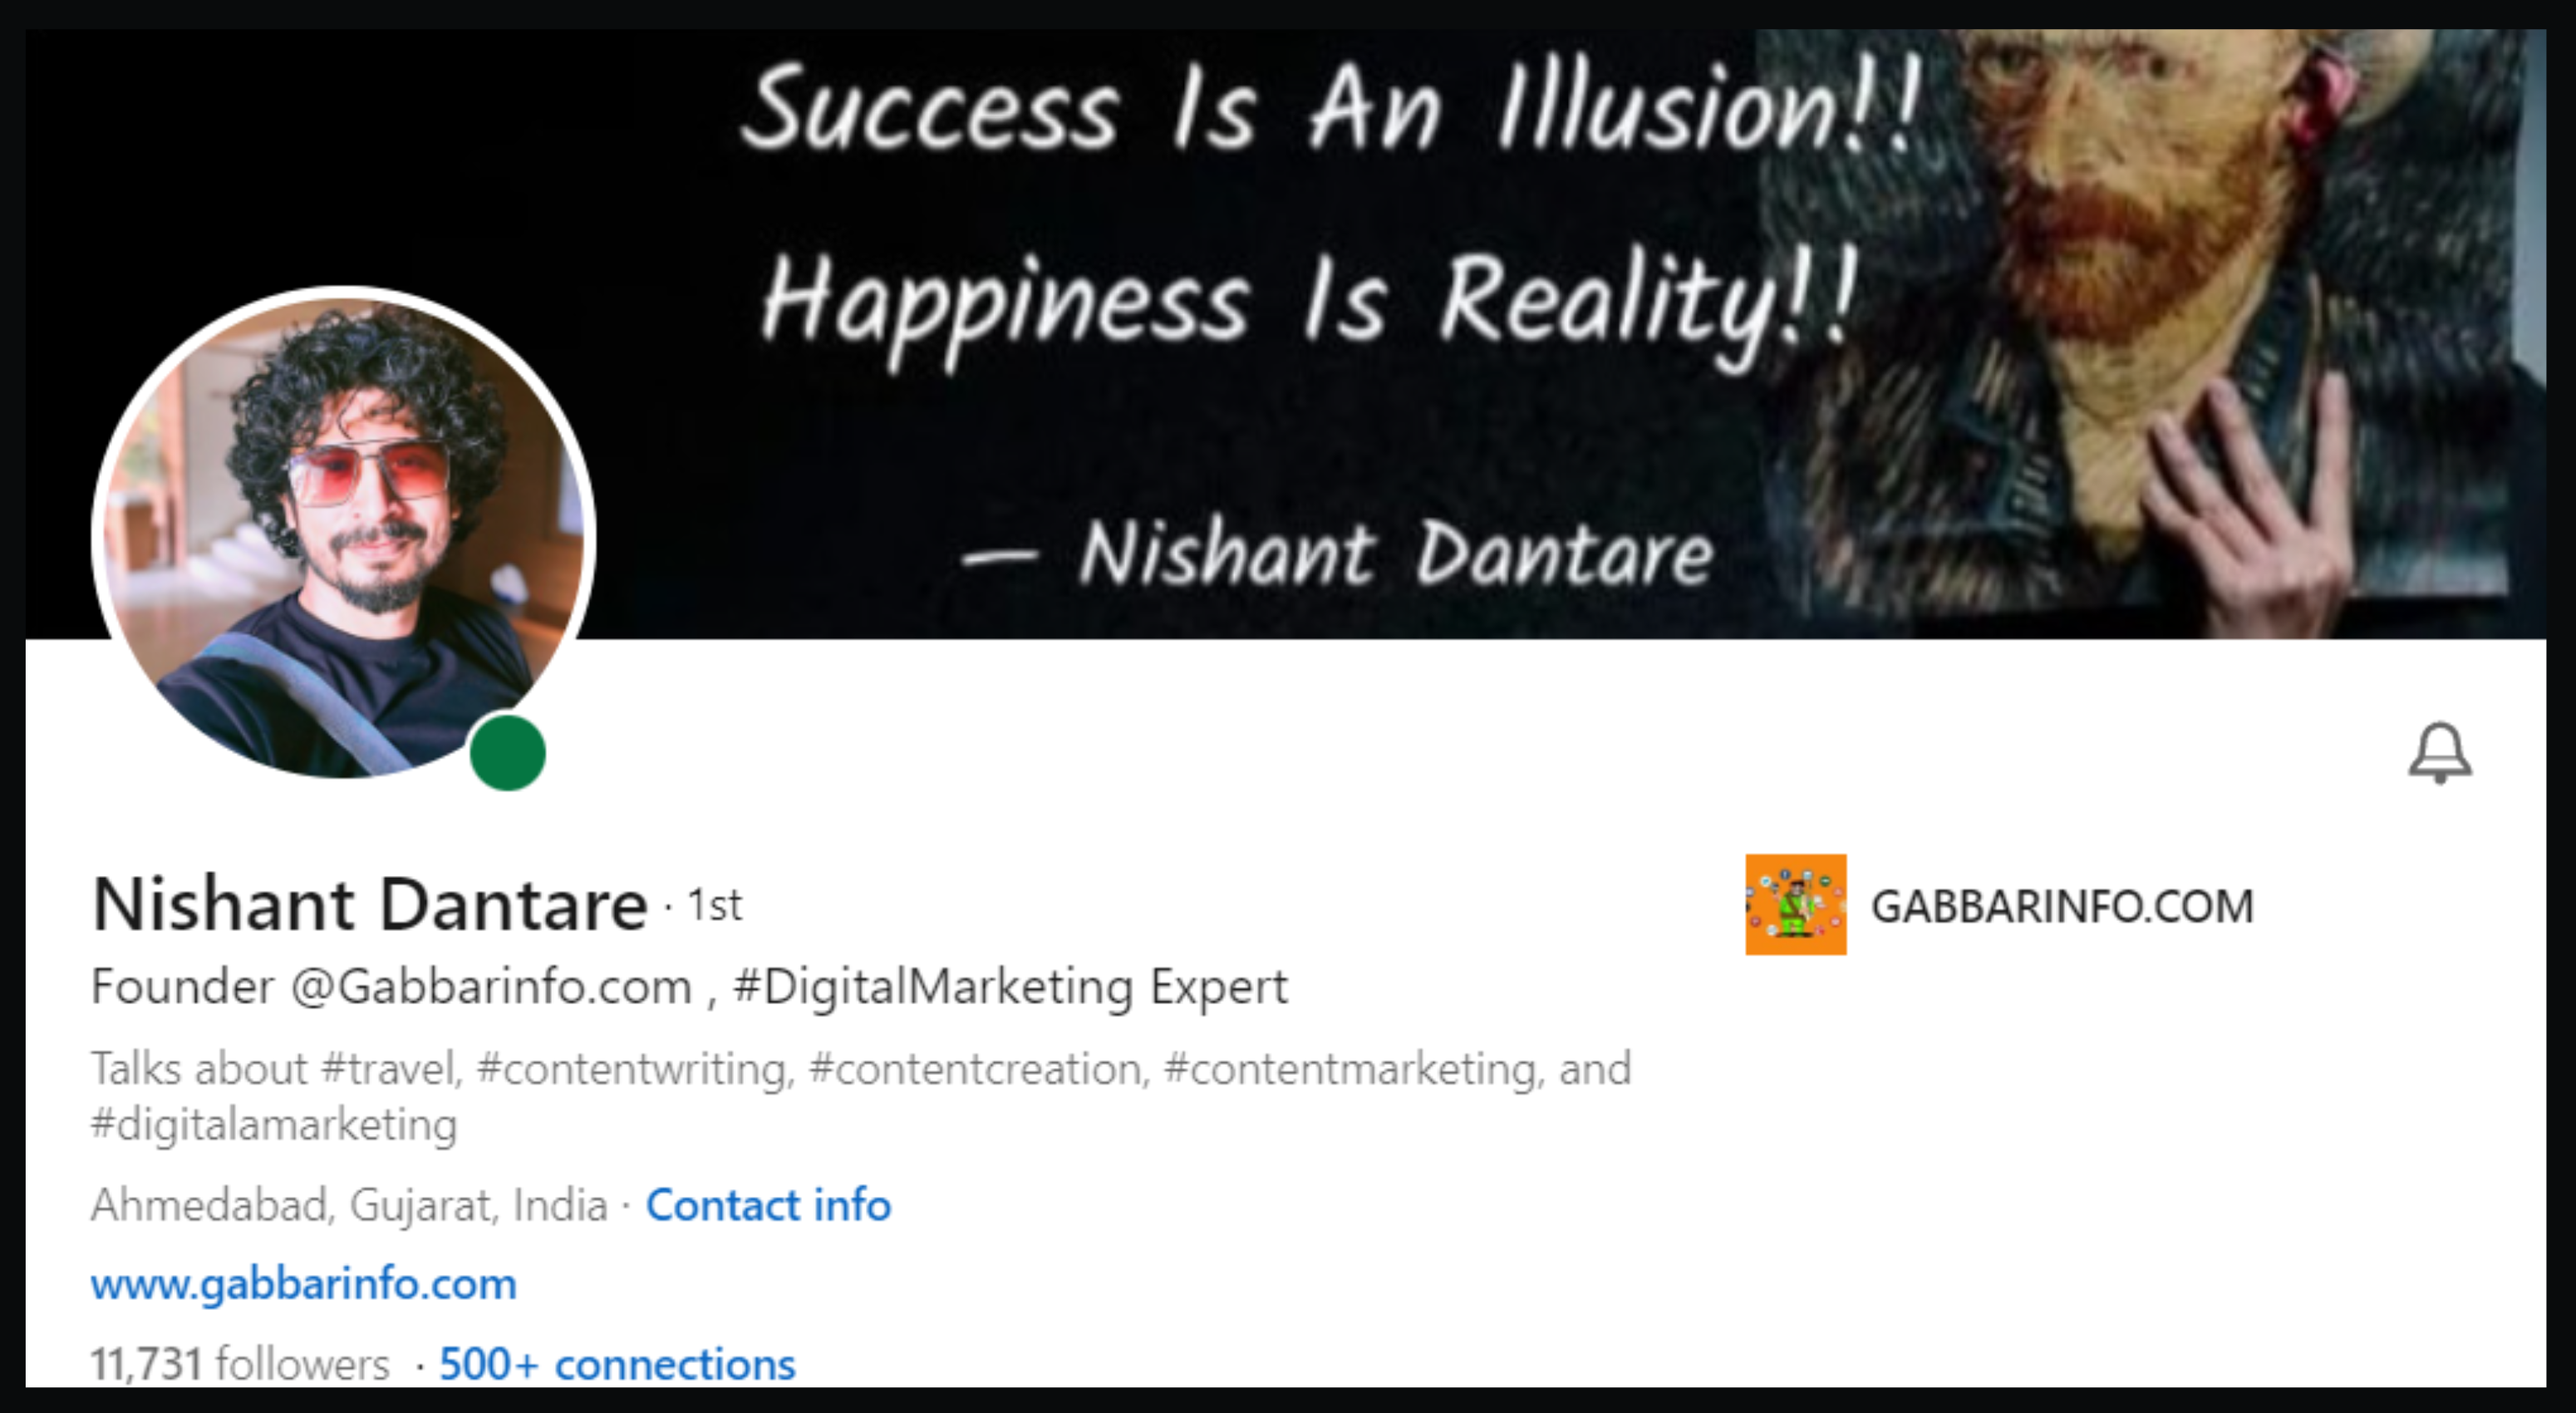 LinkedIn Profile Of Nishant Dantare